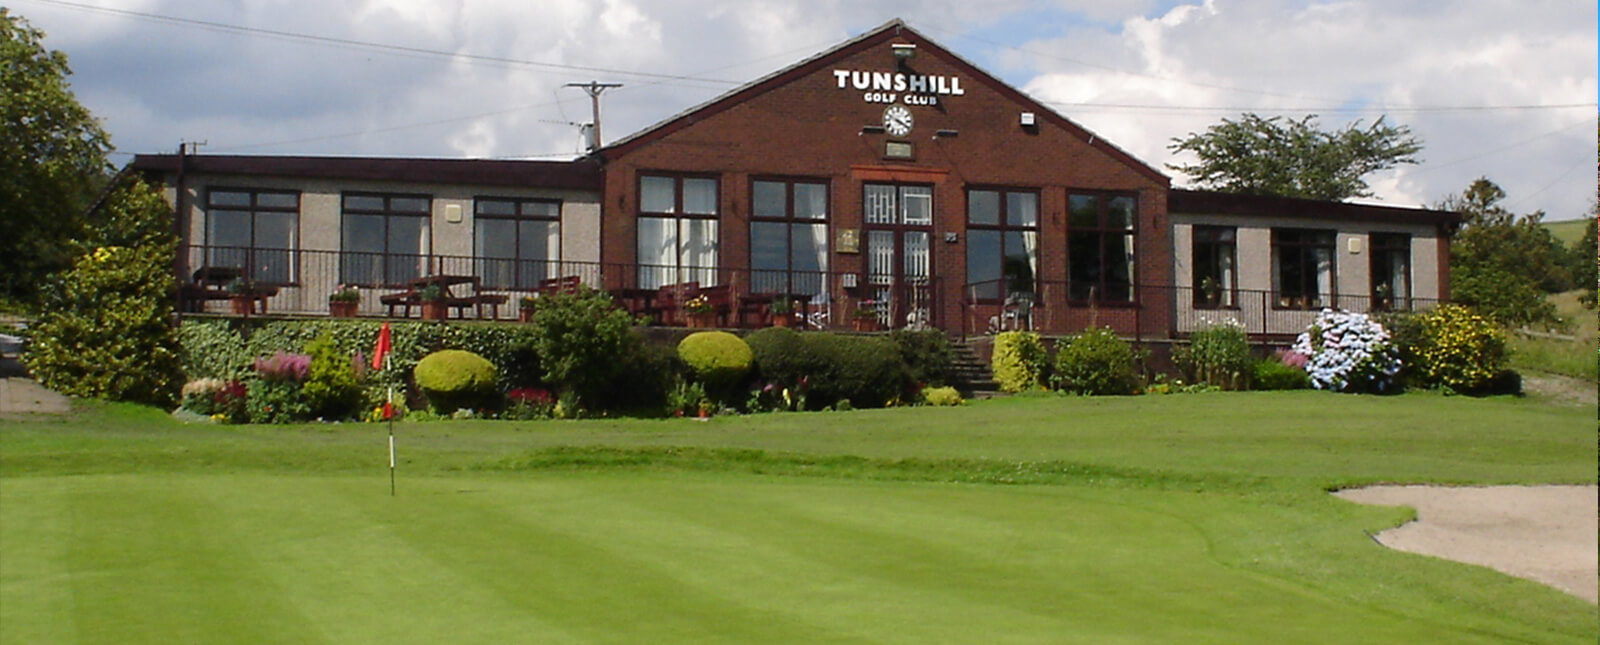 Tunshill-Golf-Club-1.jpg